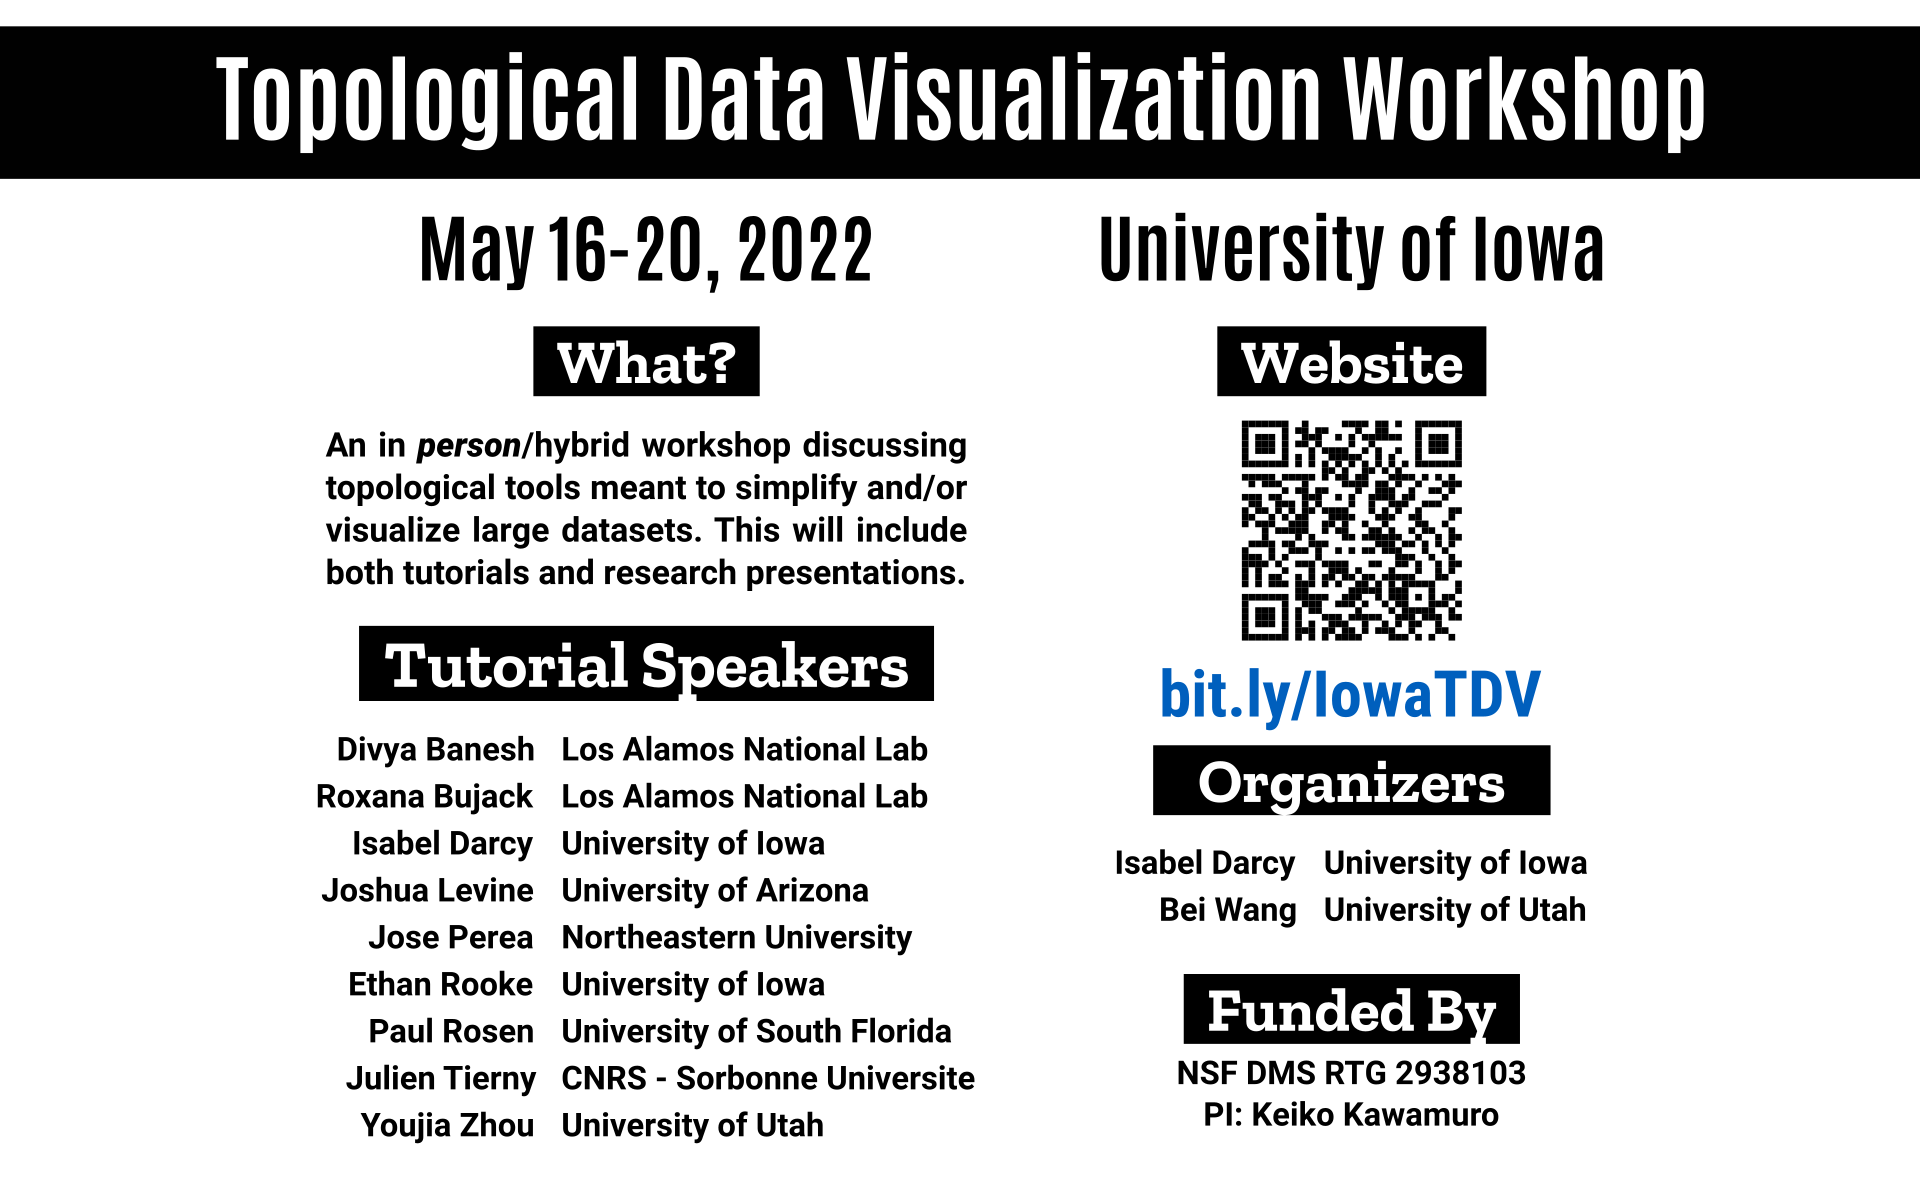 Topological Data Visualization Workshop promotional image